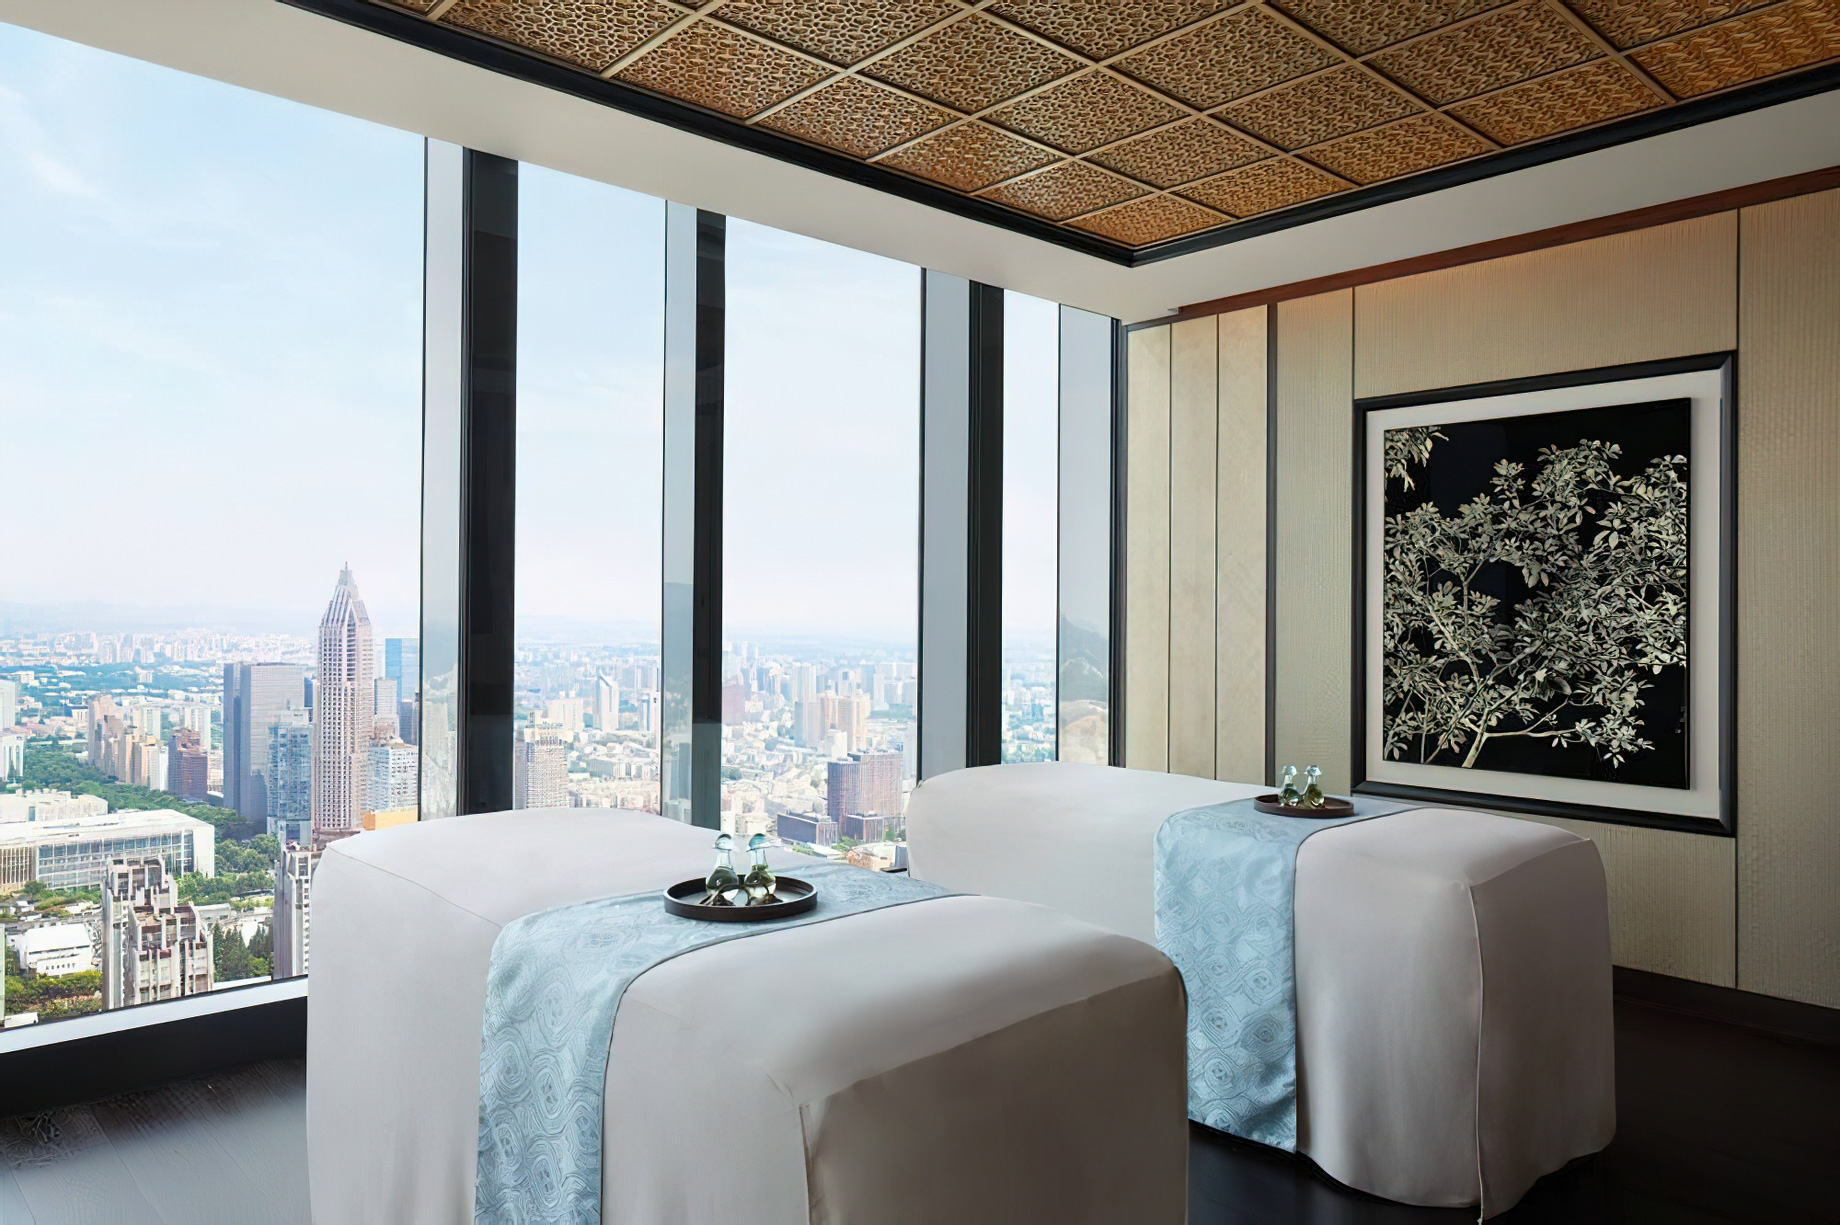 The Ritz-Carlton, Nanjing Hotel - Nanjing, China - Spa Treatment Room